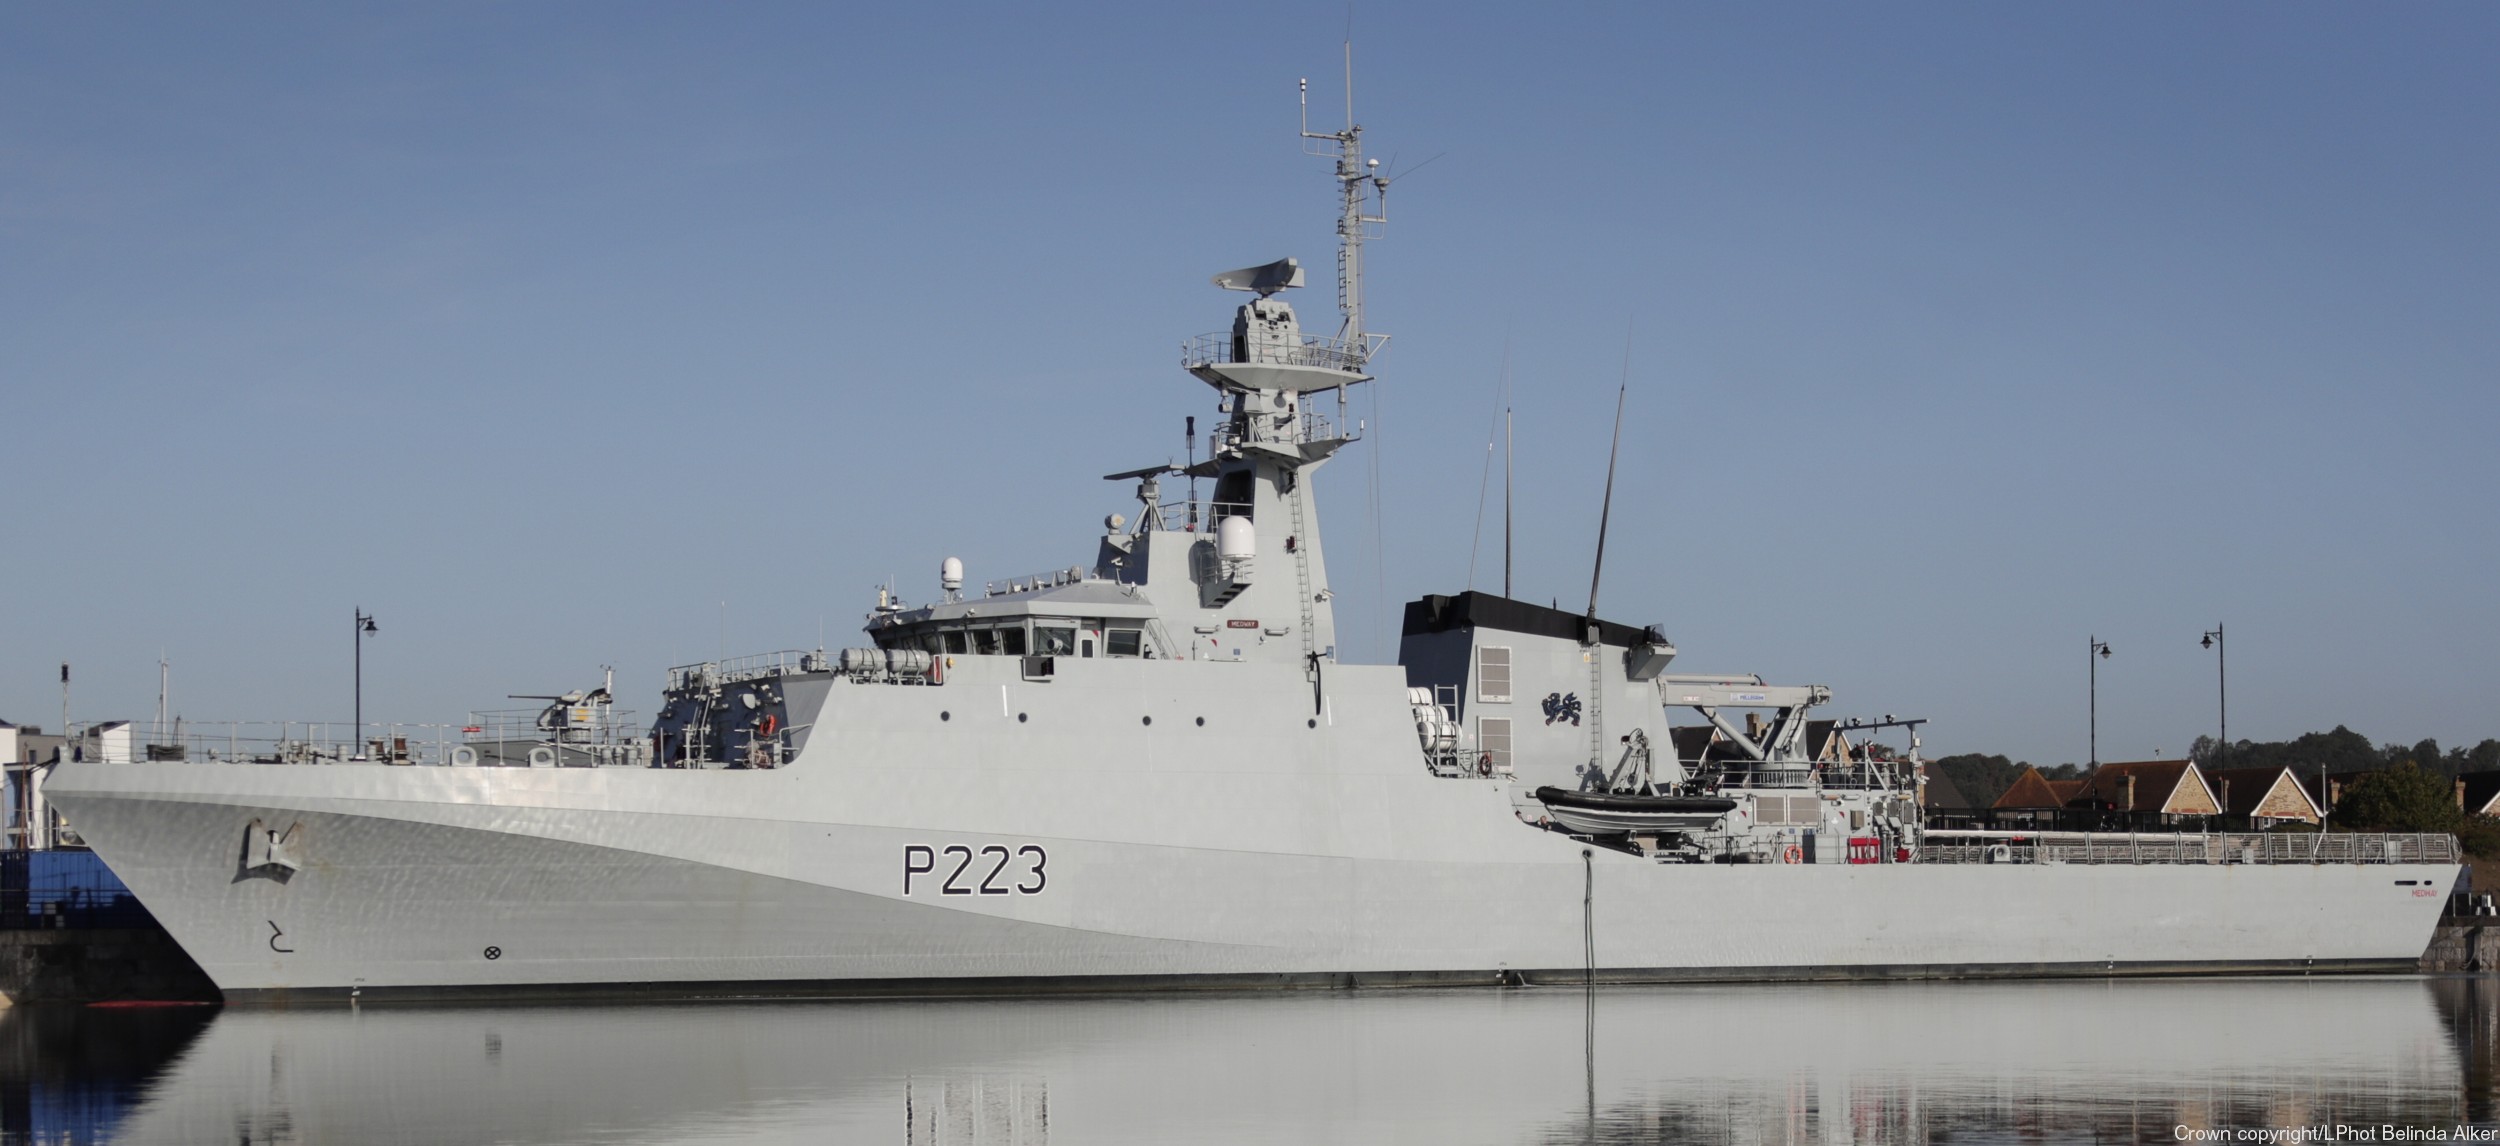 p-223 hms medway river class offshore patrol vessel opv royal navy 35